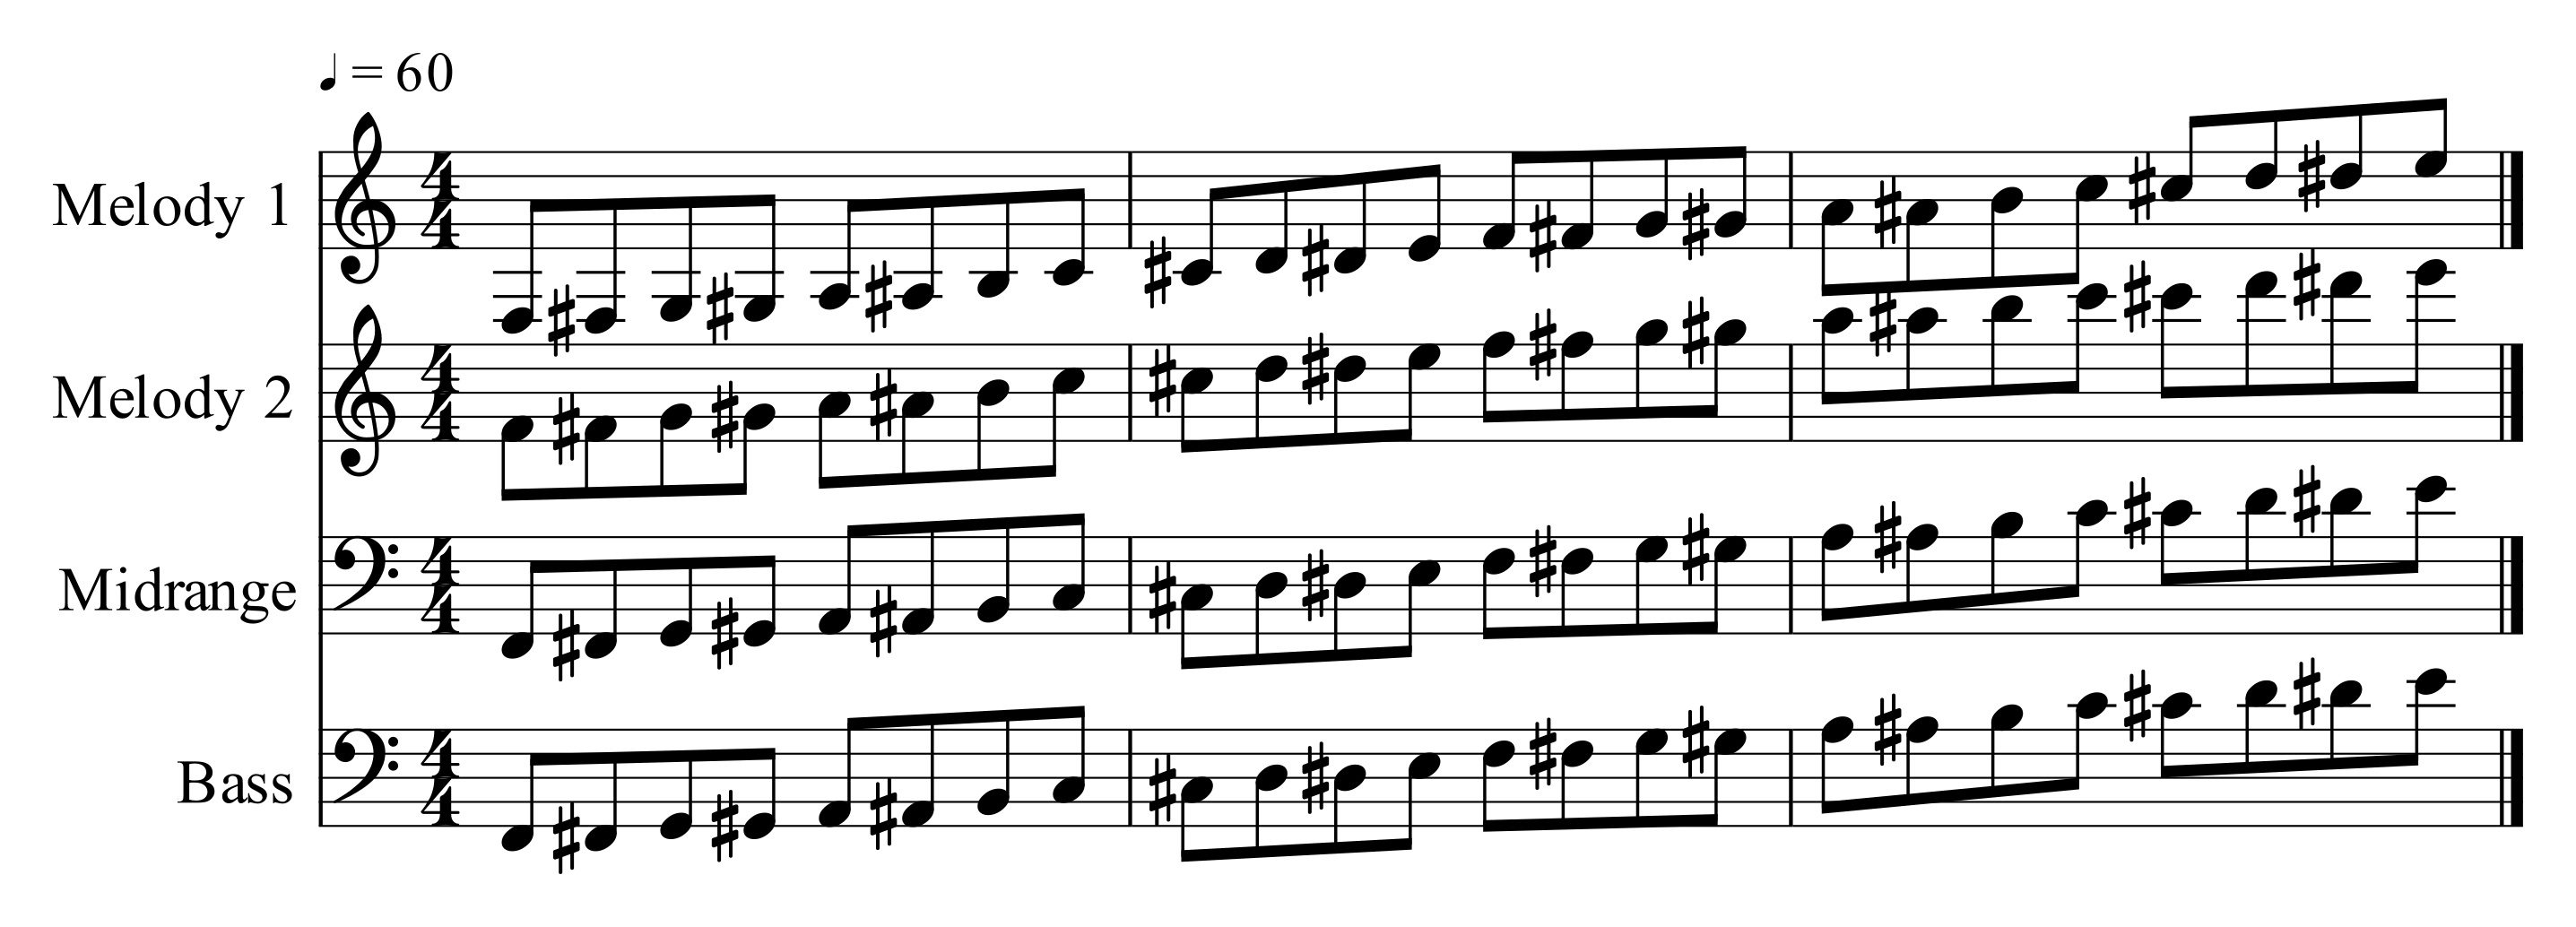 Music score of ascending scales in songKitamura